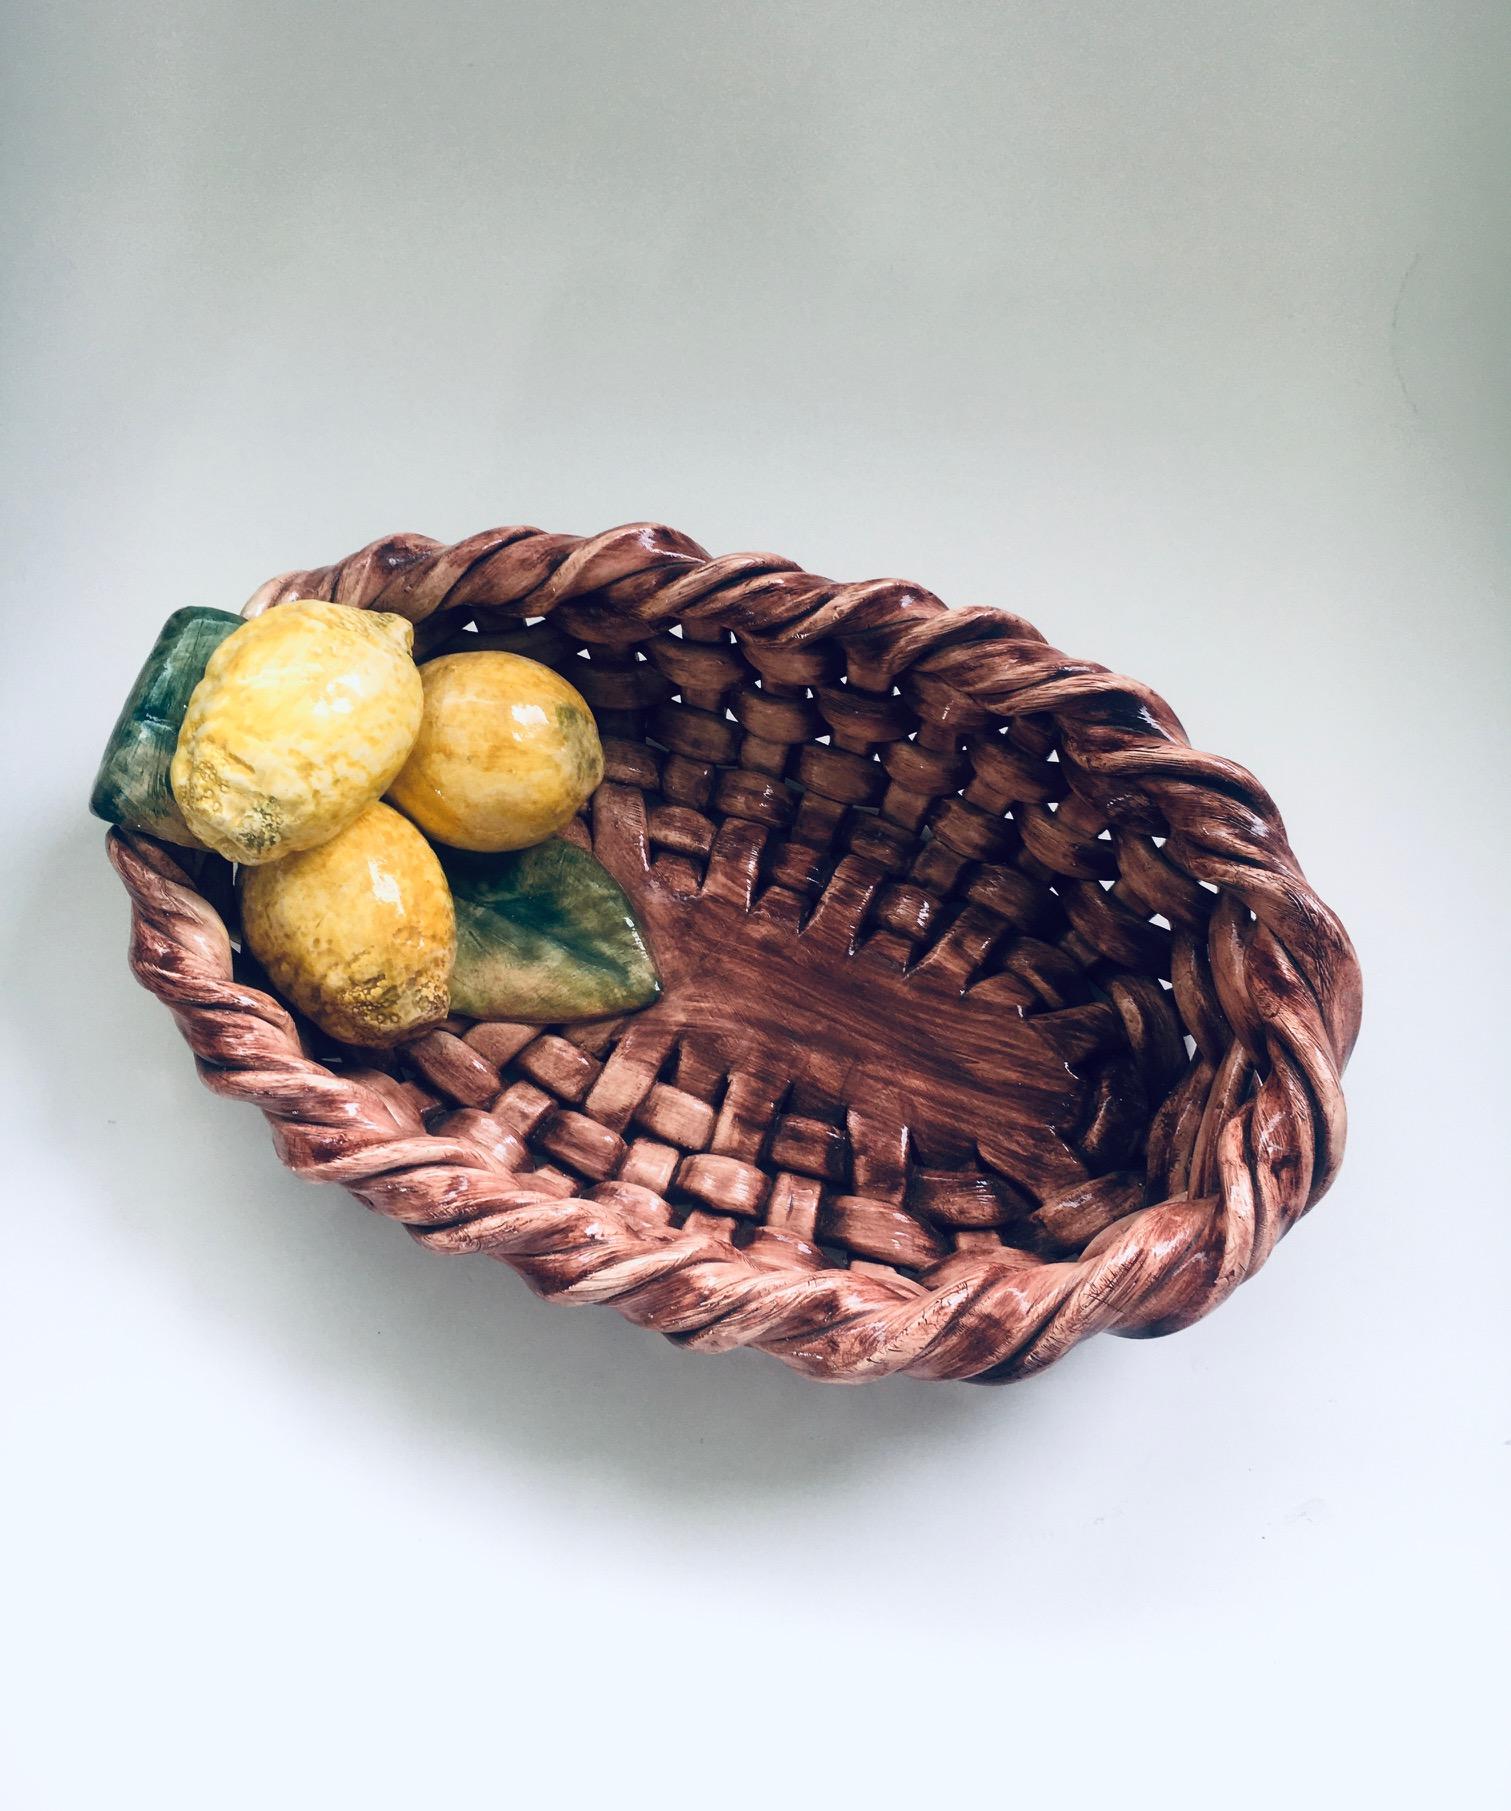 Mid-20th Century Studio Pottery Citrus Fruit Basket by J. Santos for Alcobaca, Portugal 1950's For Sale